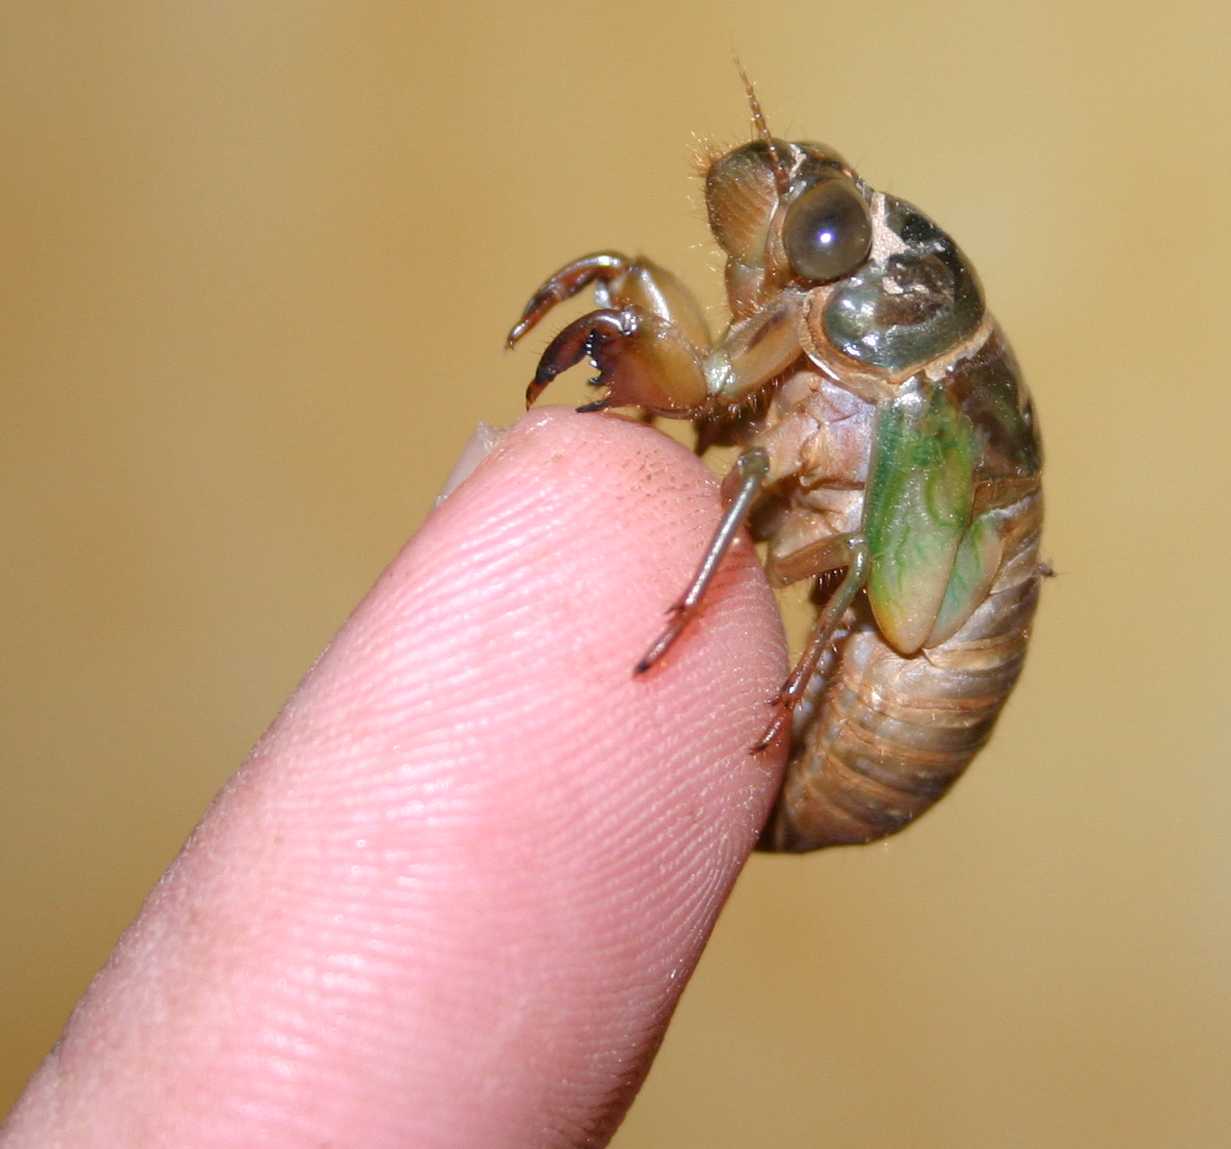 Freshly molted cicada